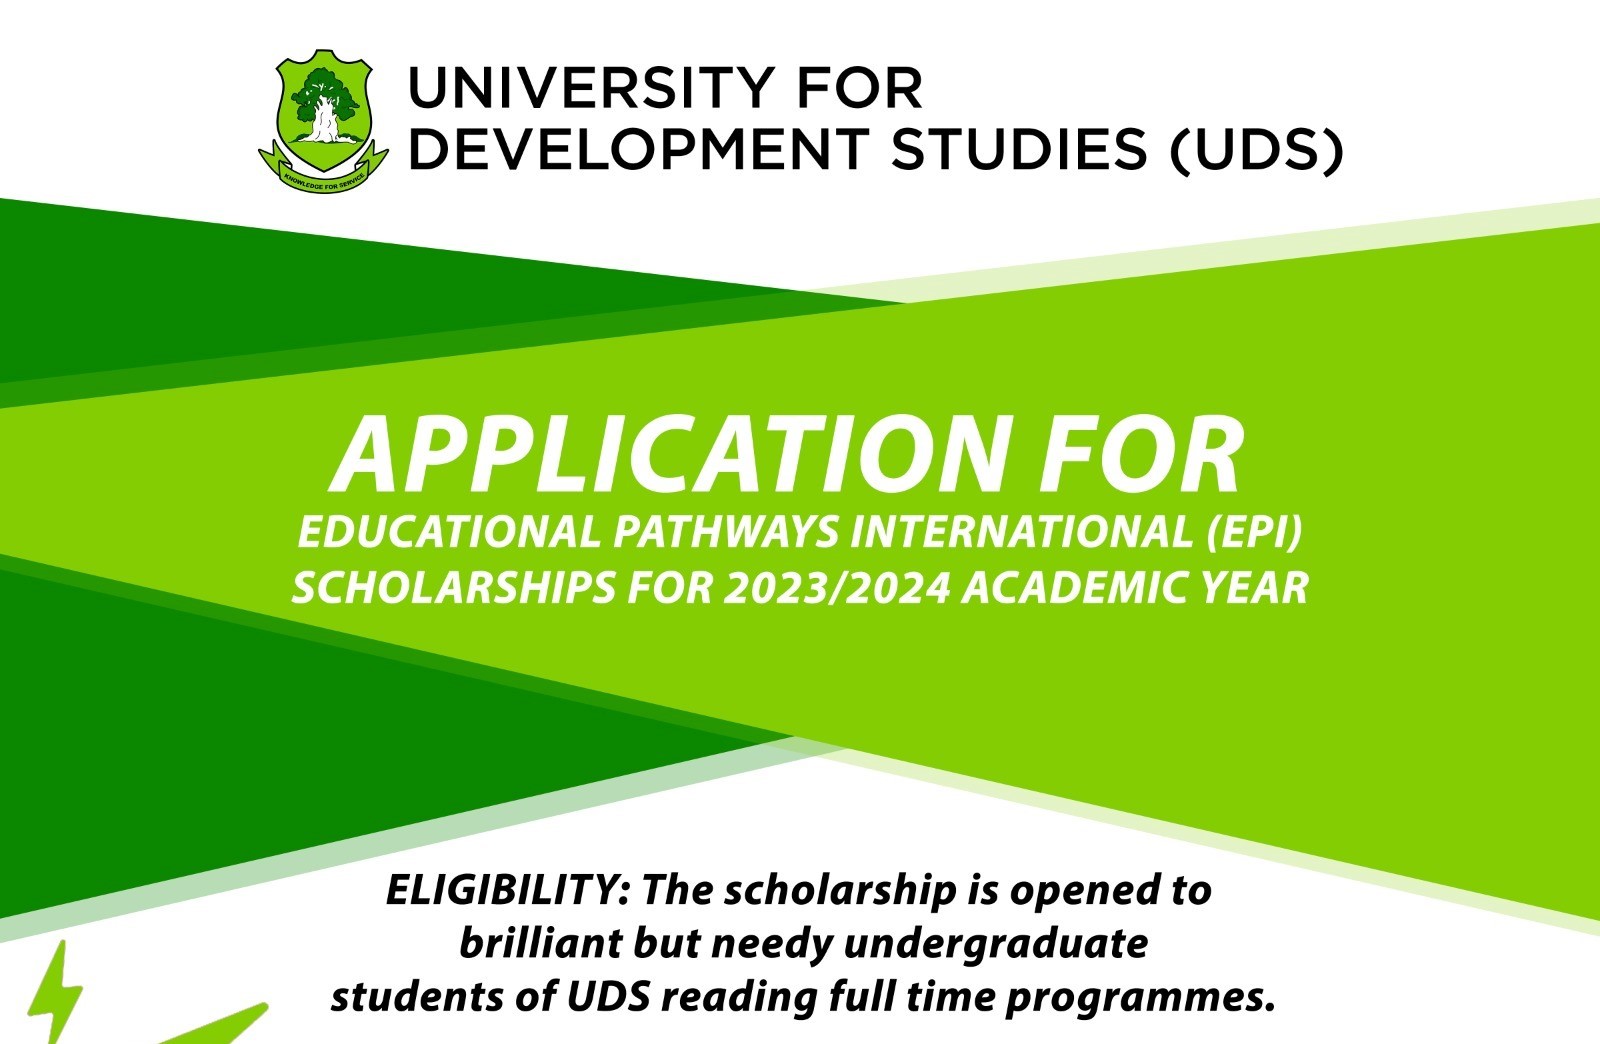 Application For Educational Pathways International (EPI) Scholarships For 2023/2024 Academic Year